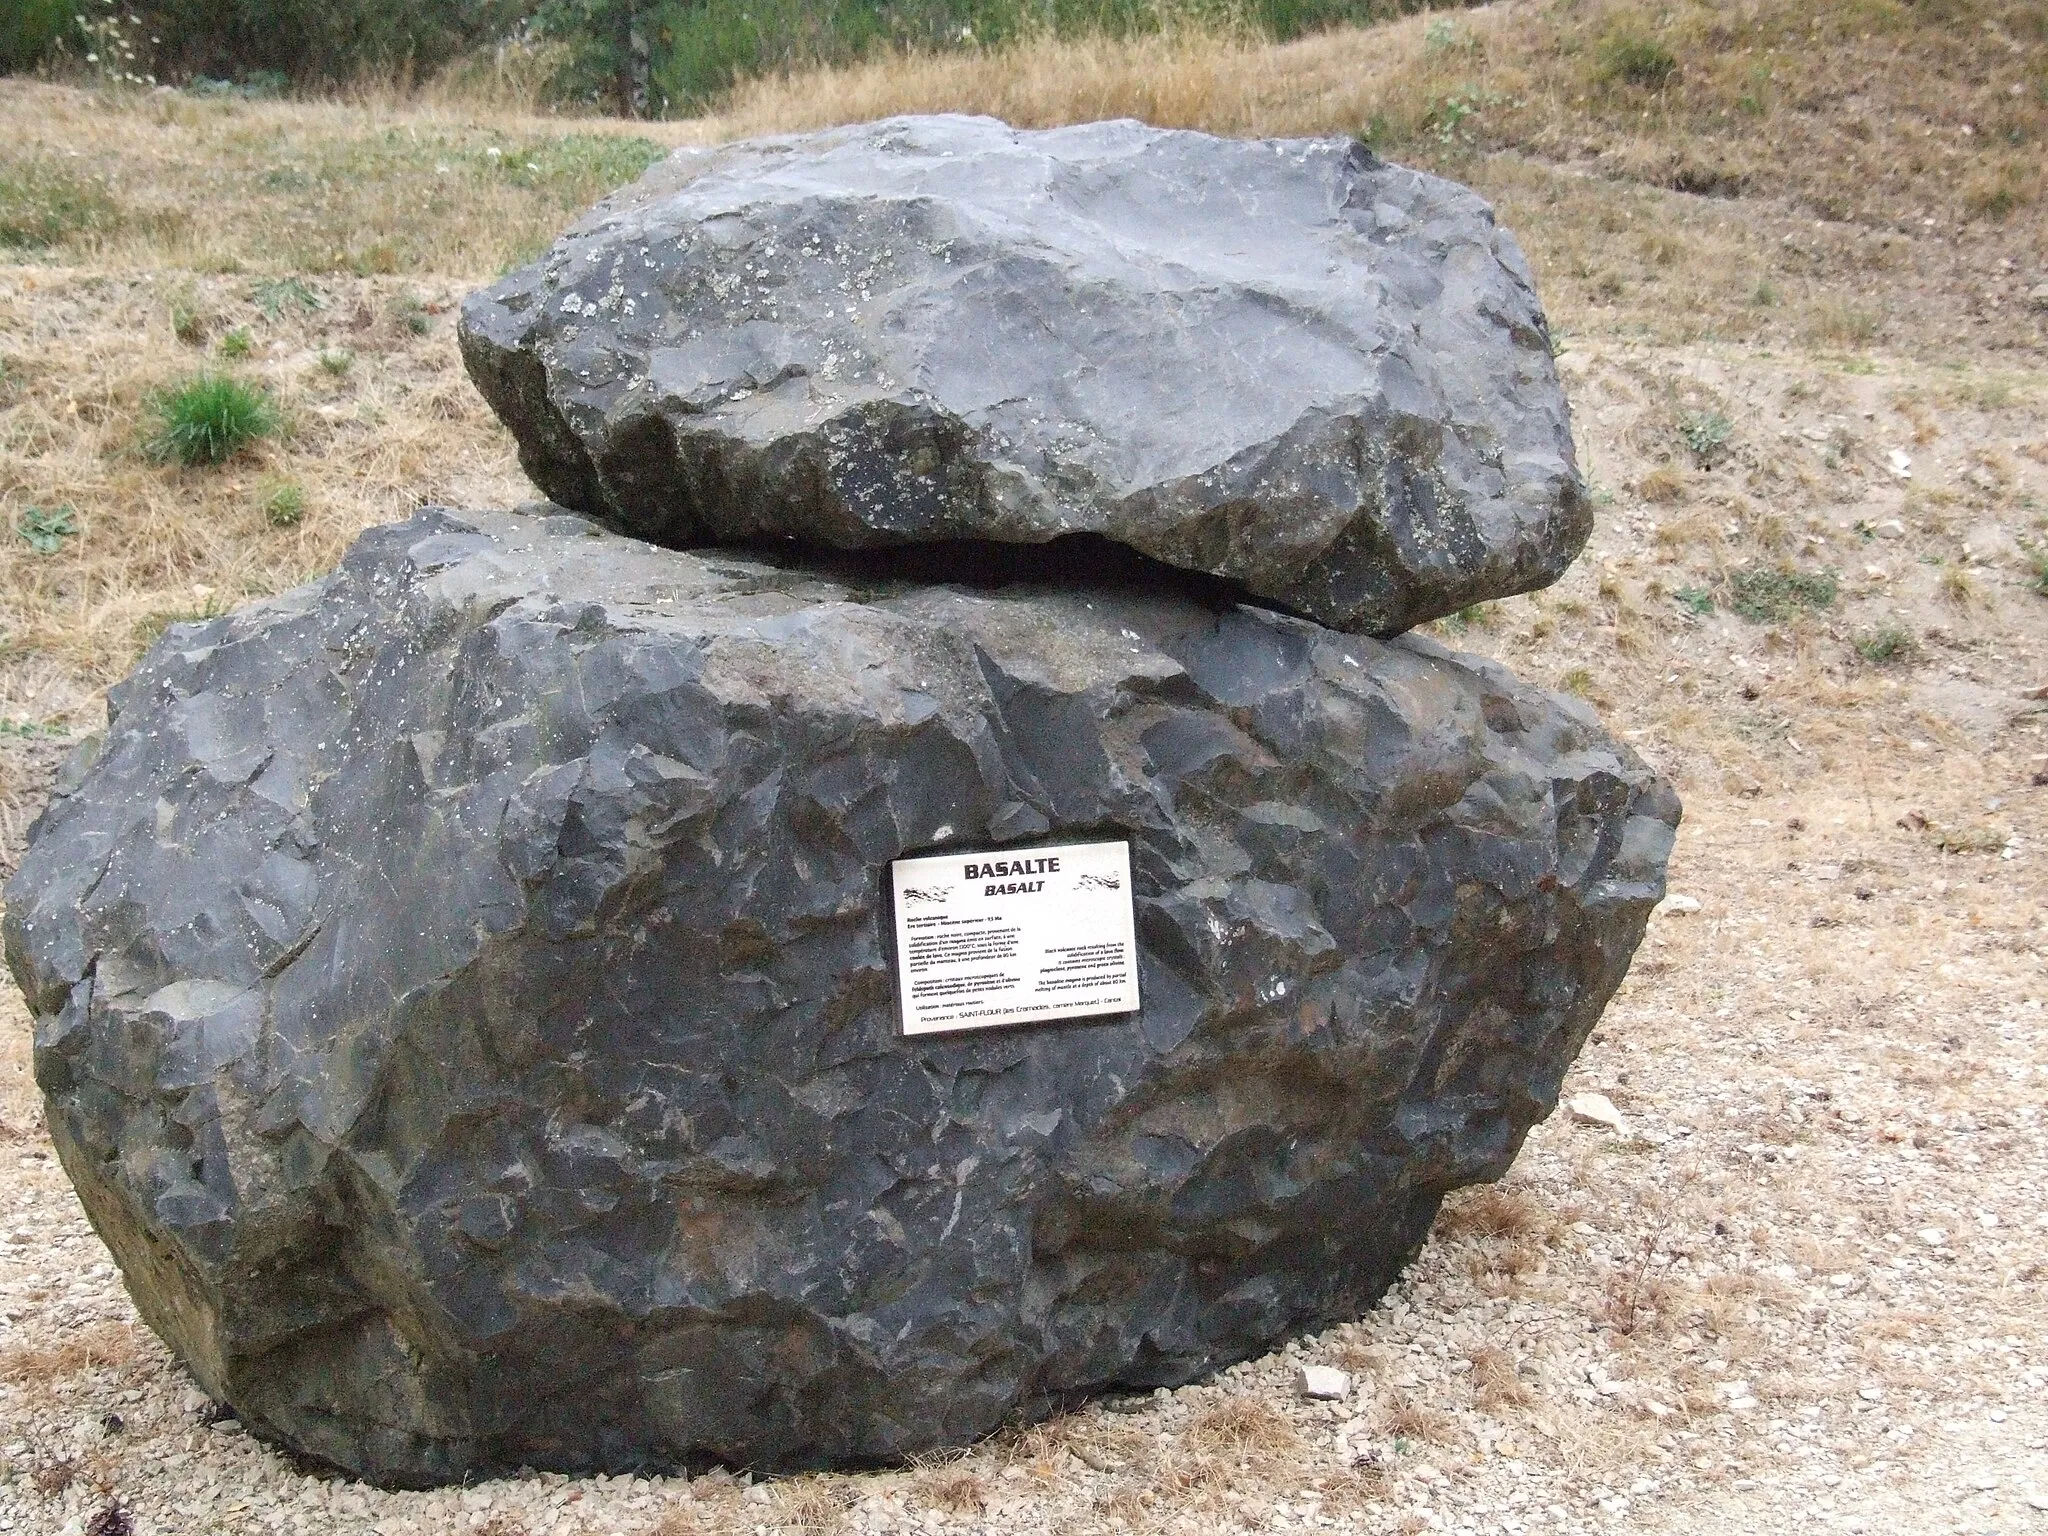 Photo showing: The Géoscope at the motorway service station, La Lozère, displays a collection of rocks found in Lozère. Each has a description.

Basalt
Provenance:St Flour, Cantal